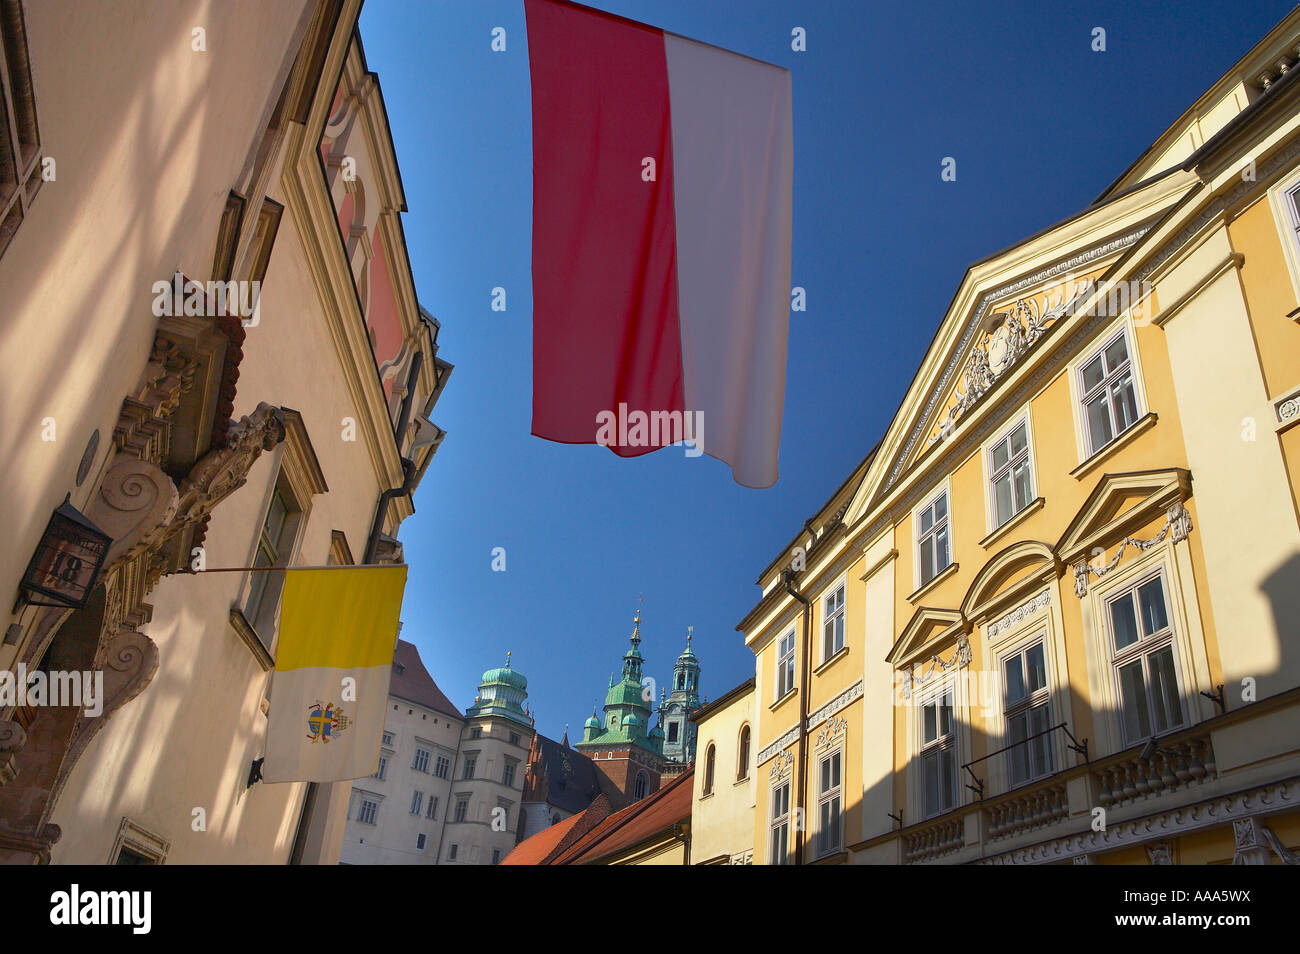 Ulica Domherrenstraße, Stare Miasto Altstadt, Wawel, Krakau, Krakau, Polen Stockfoto